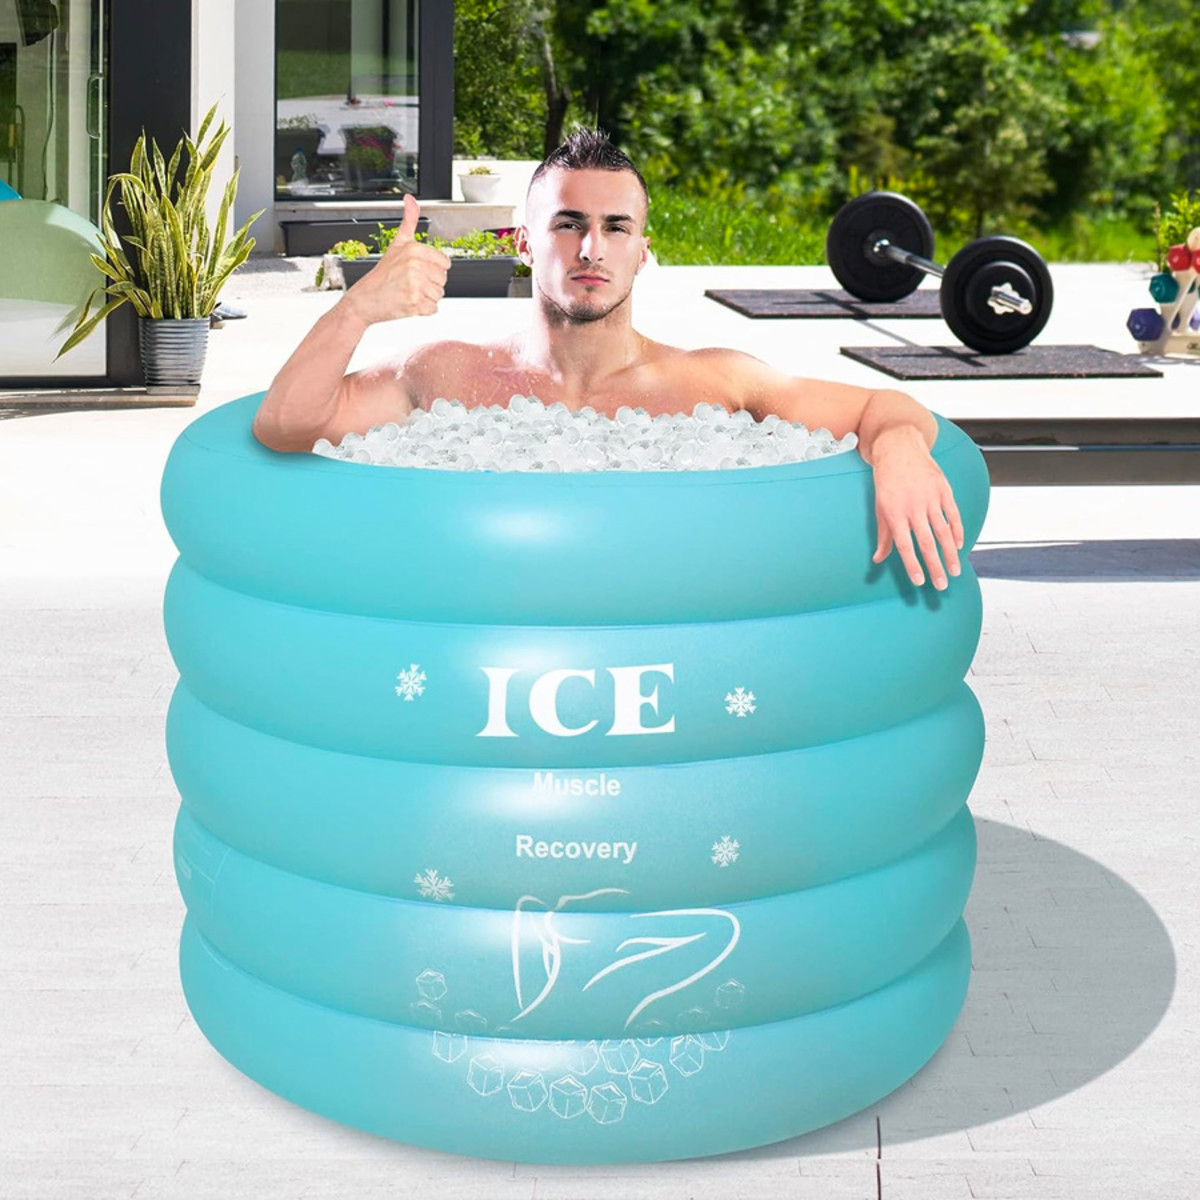 https://www.mensjournal.com/.image/t_share/MjAxMzA5Njc1NzM0NTc0NjE5/inflatoast-portable-ice-bath.jpg